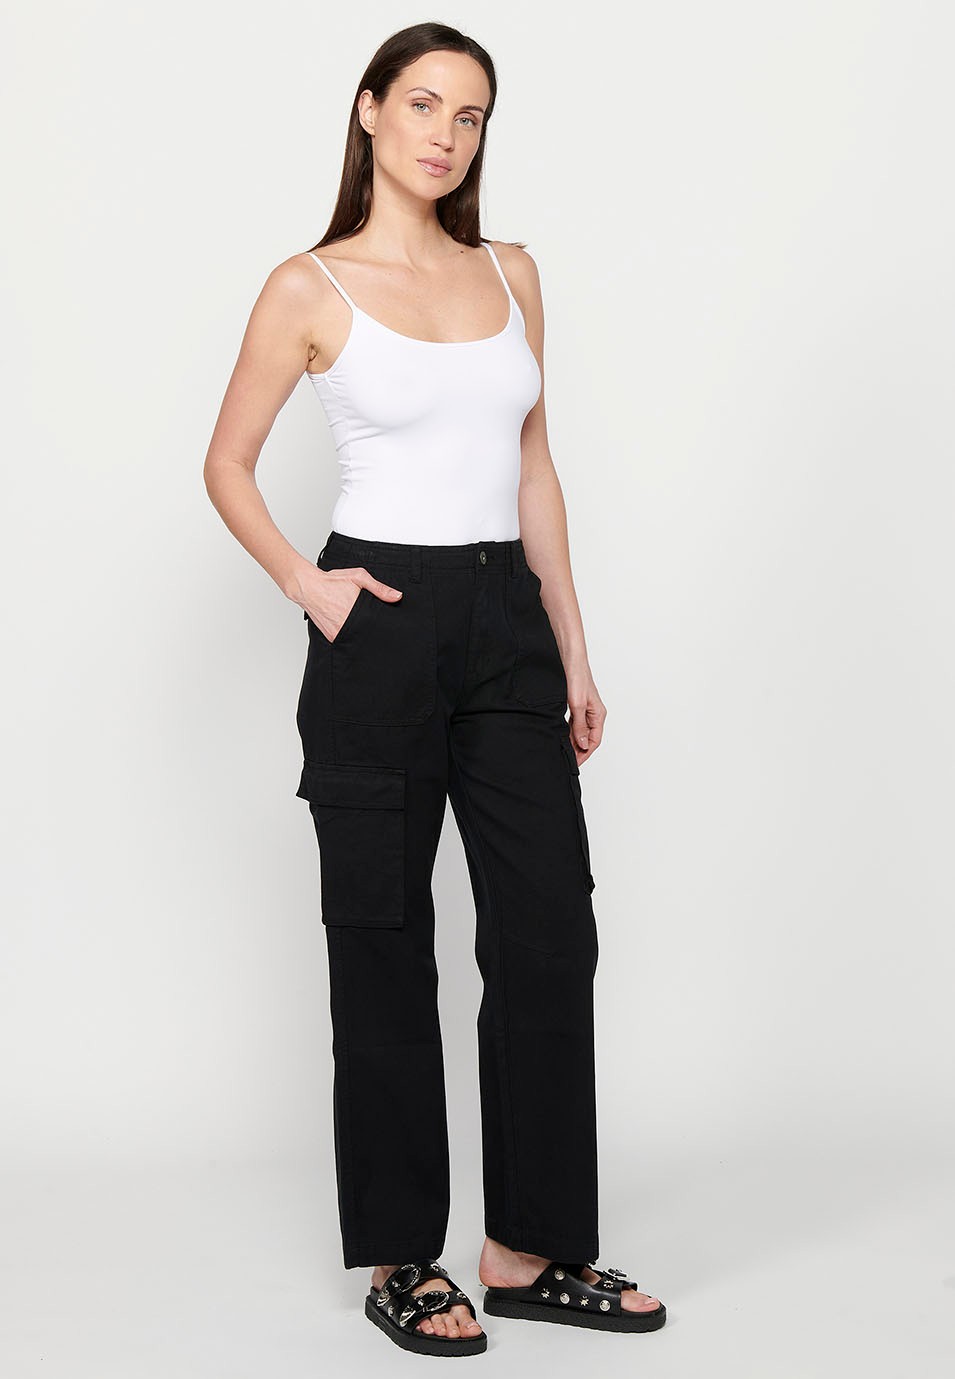 Pantalón largo con bolsillos cargo de algodón, color negro para mujer